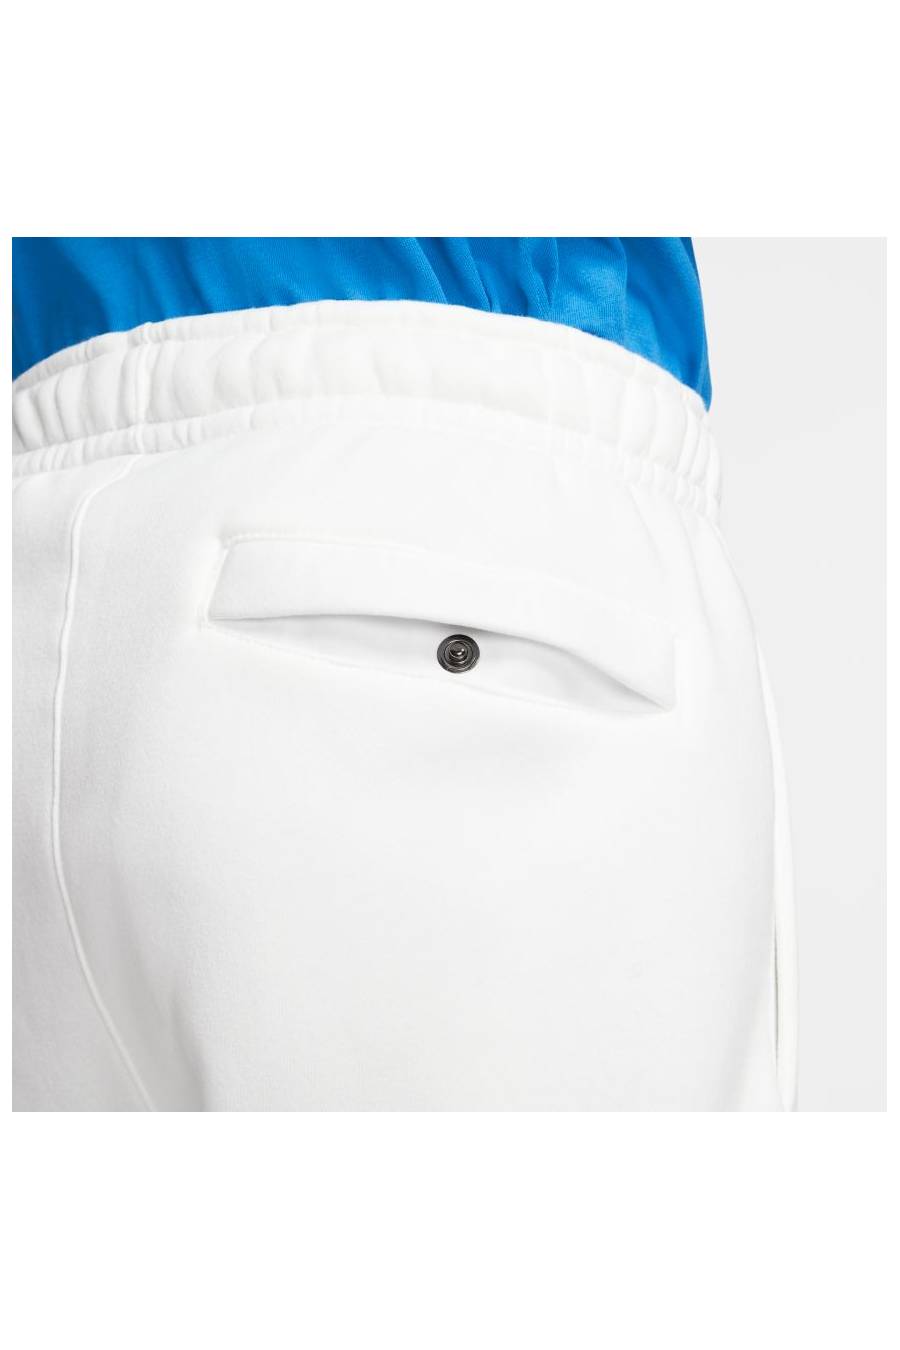 Pantalón para hombre Nike Sportswear Club Fleece BV2671-100 - msdsport - masdeporte